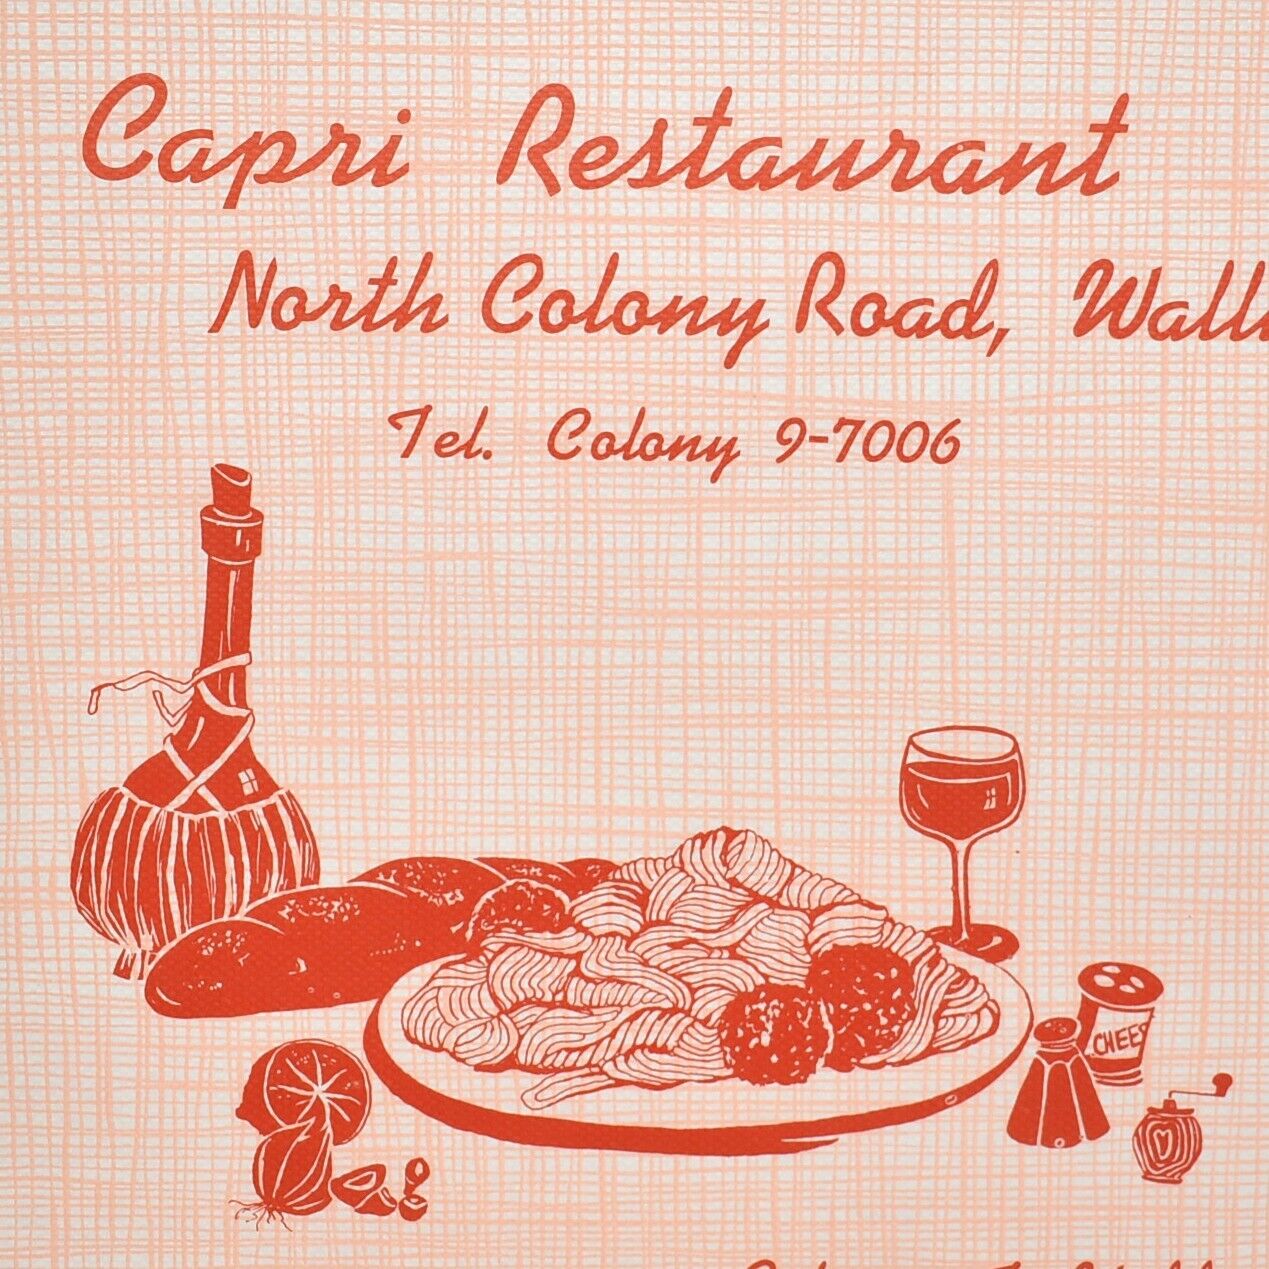 1950s Capri Restaurant North Colony Road Wallingford New Haven Co Connecticut